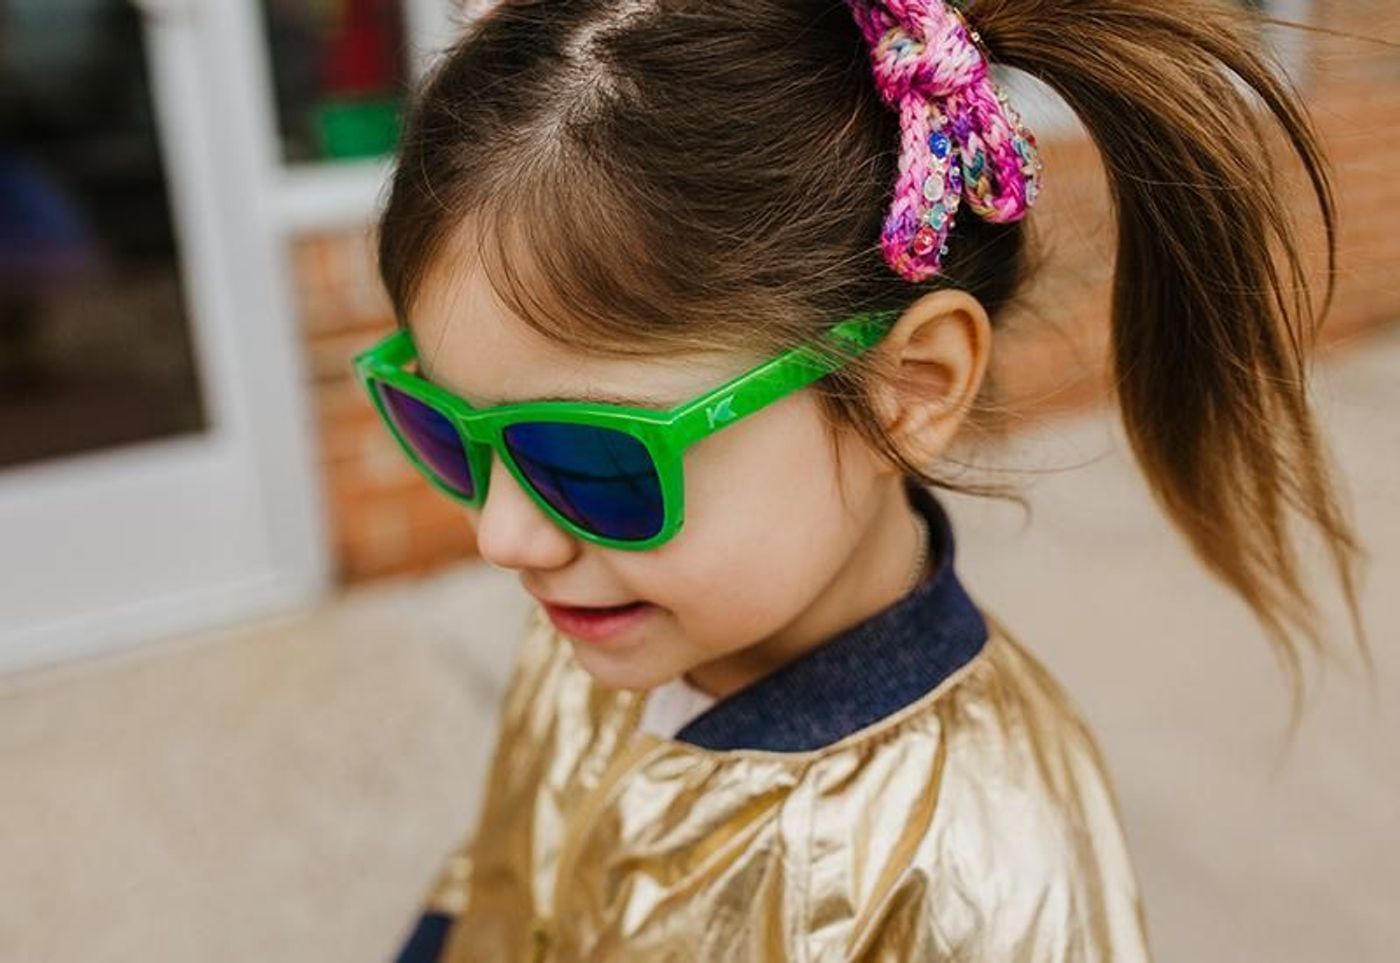 Knockaround Kids Premium Sunglasses - Slime Time - Wander Outdoors